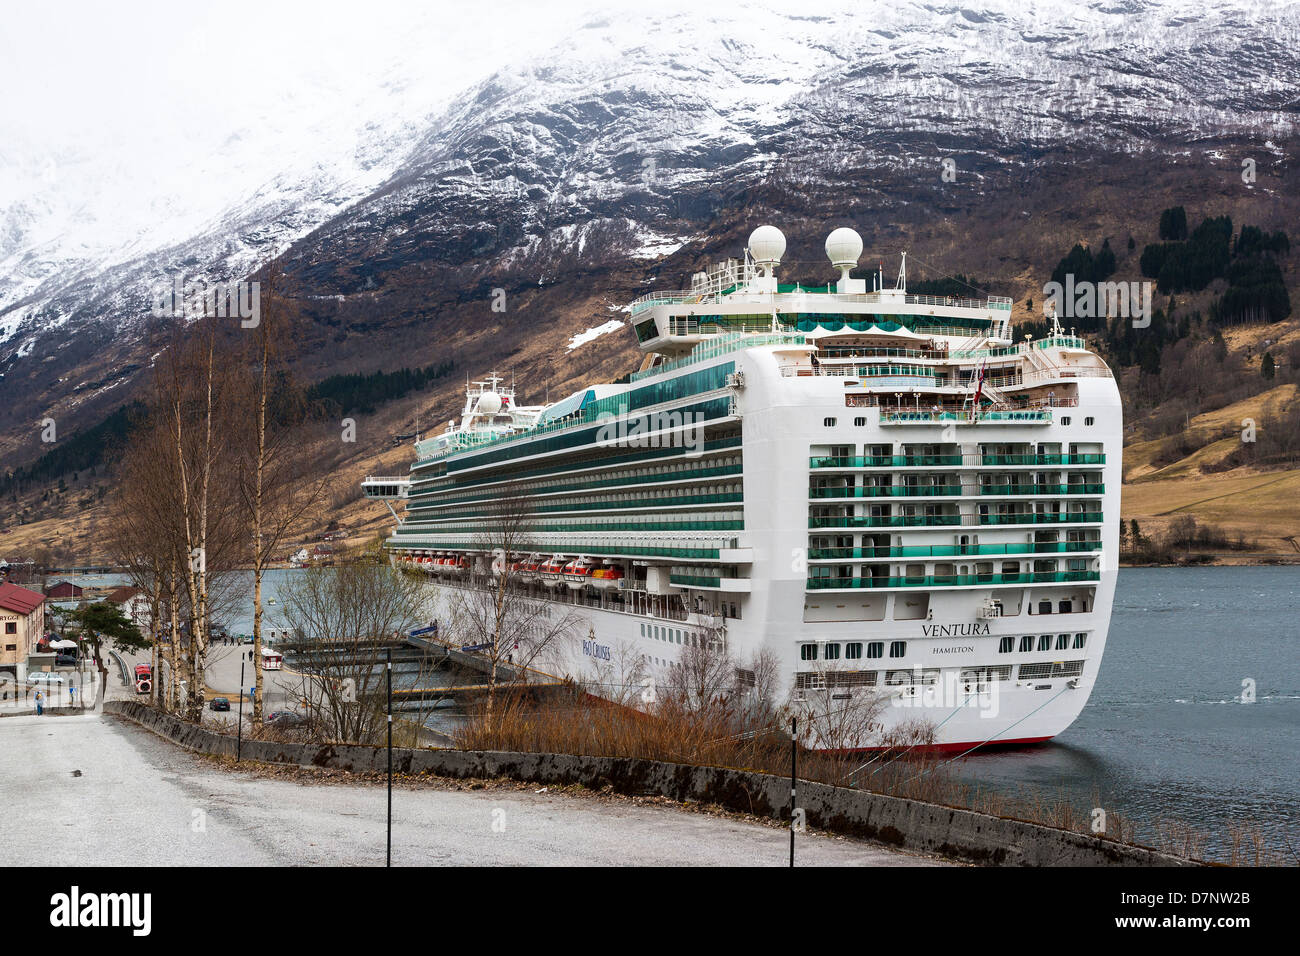 P&O Ventura docked in Olden, Norway. Stock Photo